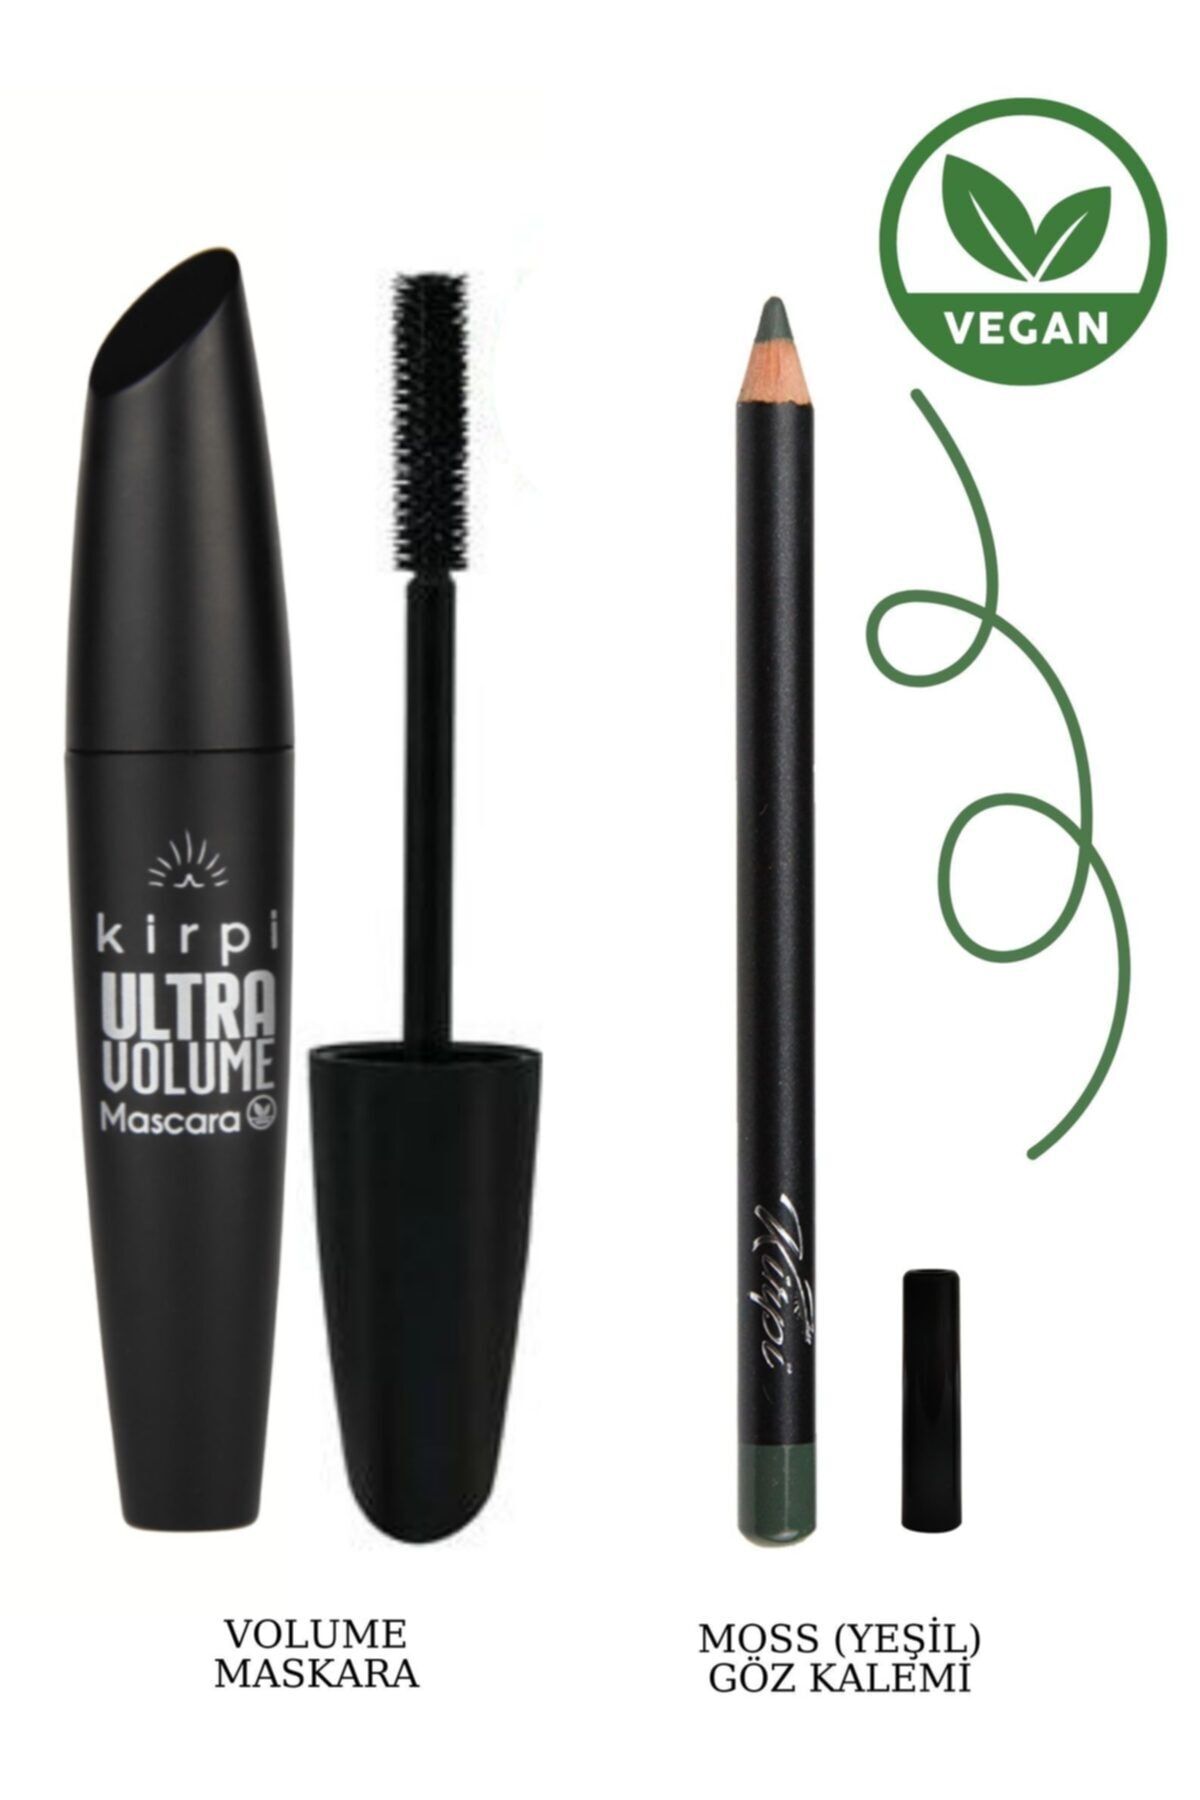 Kirpi Ultra Volume Mascara + Moss Yeşil Göz Kalemi